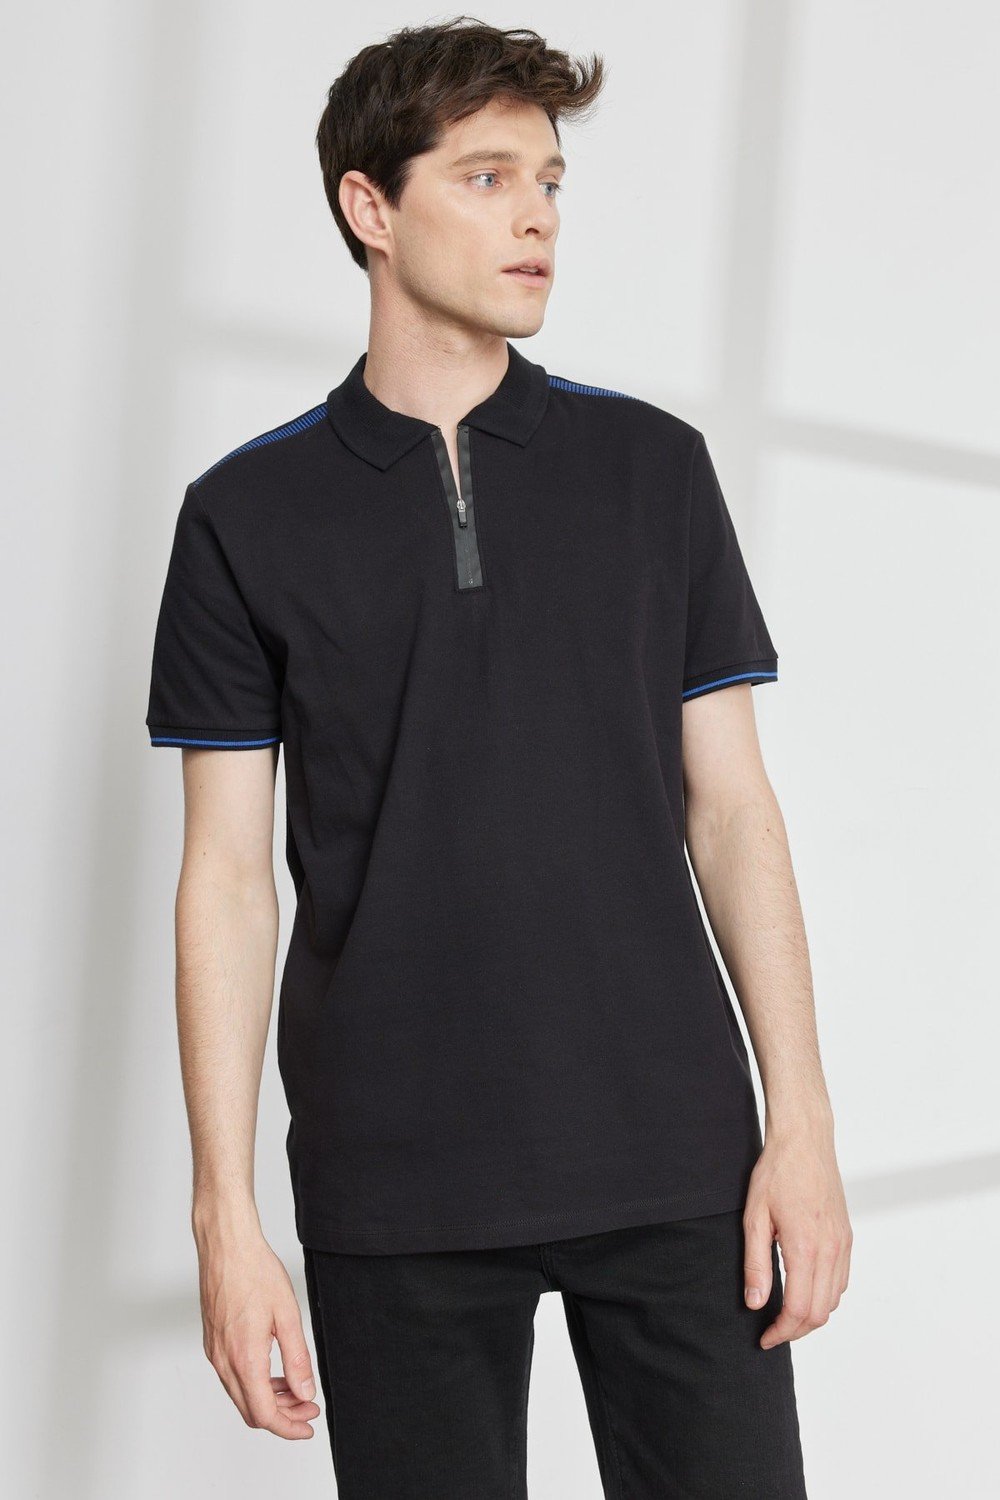 ALTINYILDIZ CLASSICS Men's Black Slim Fit Slim Fit Polo Neck Short Sleeve Cotton T-Shirt.